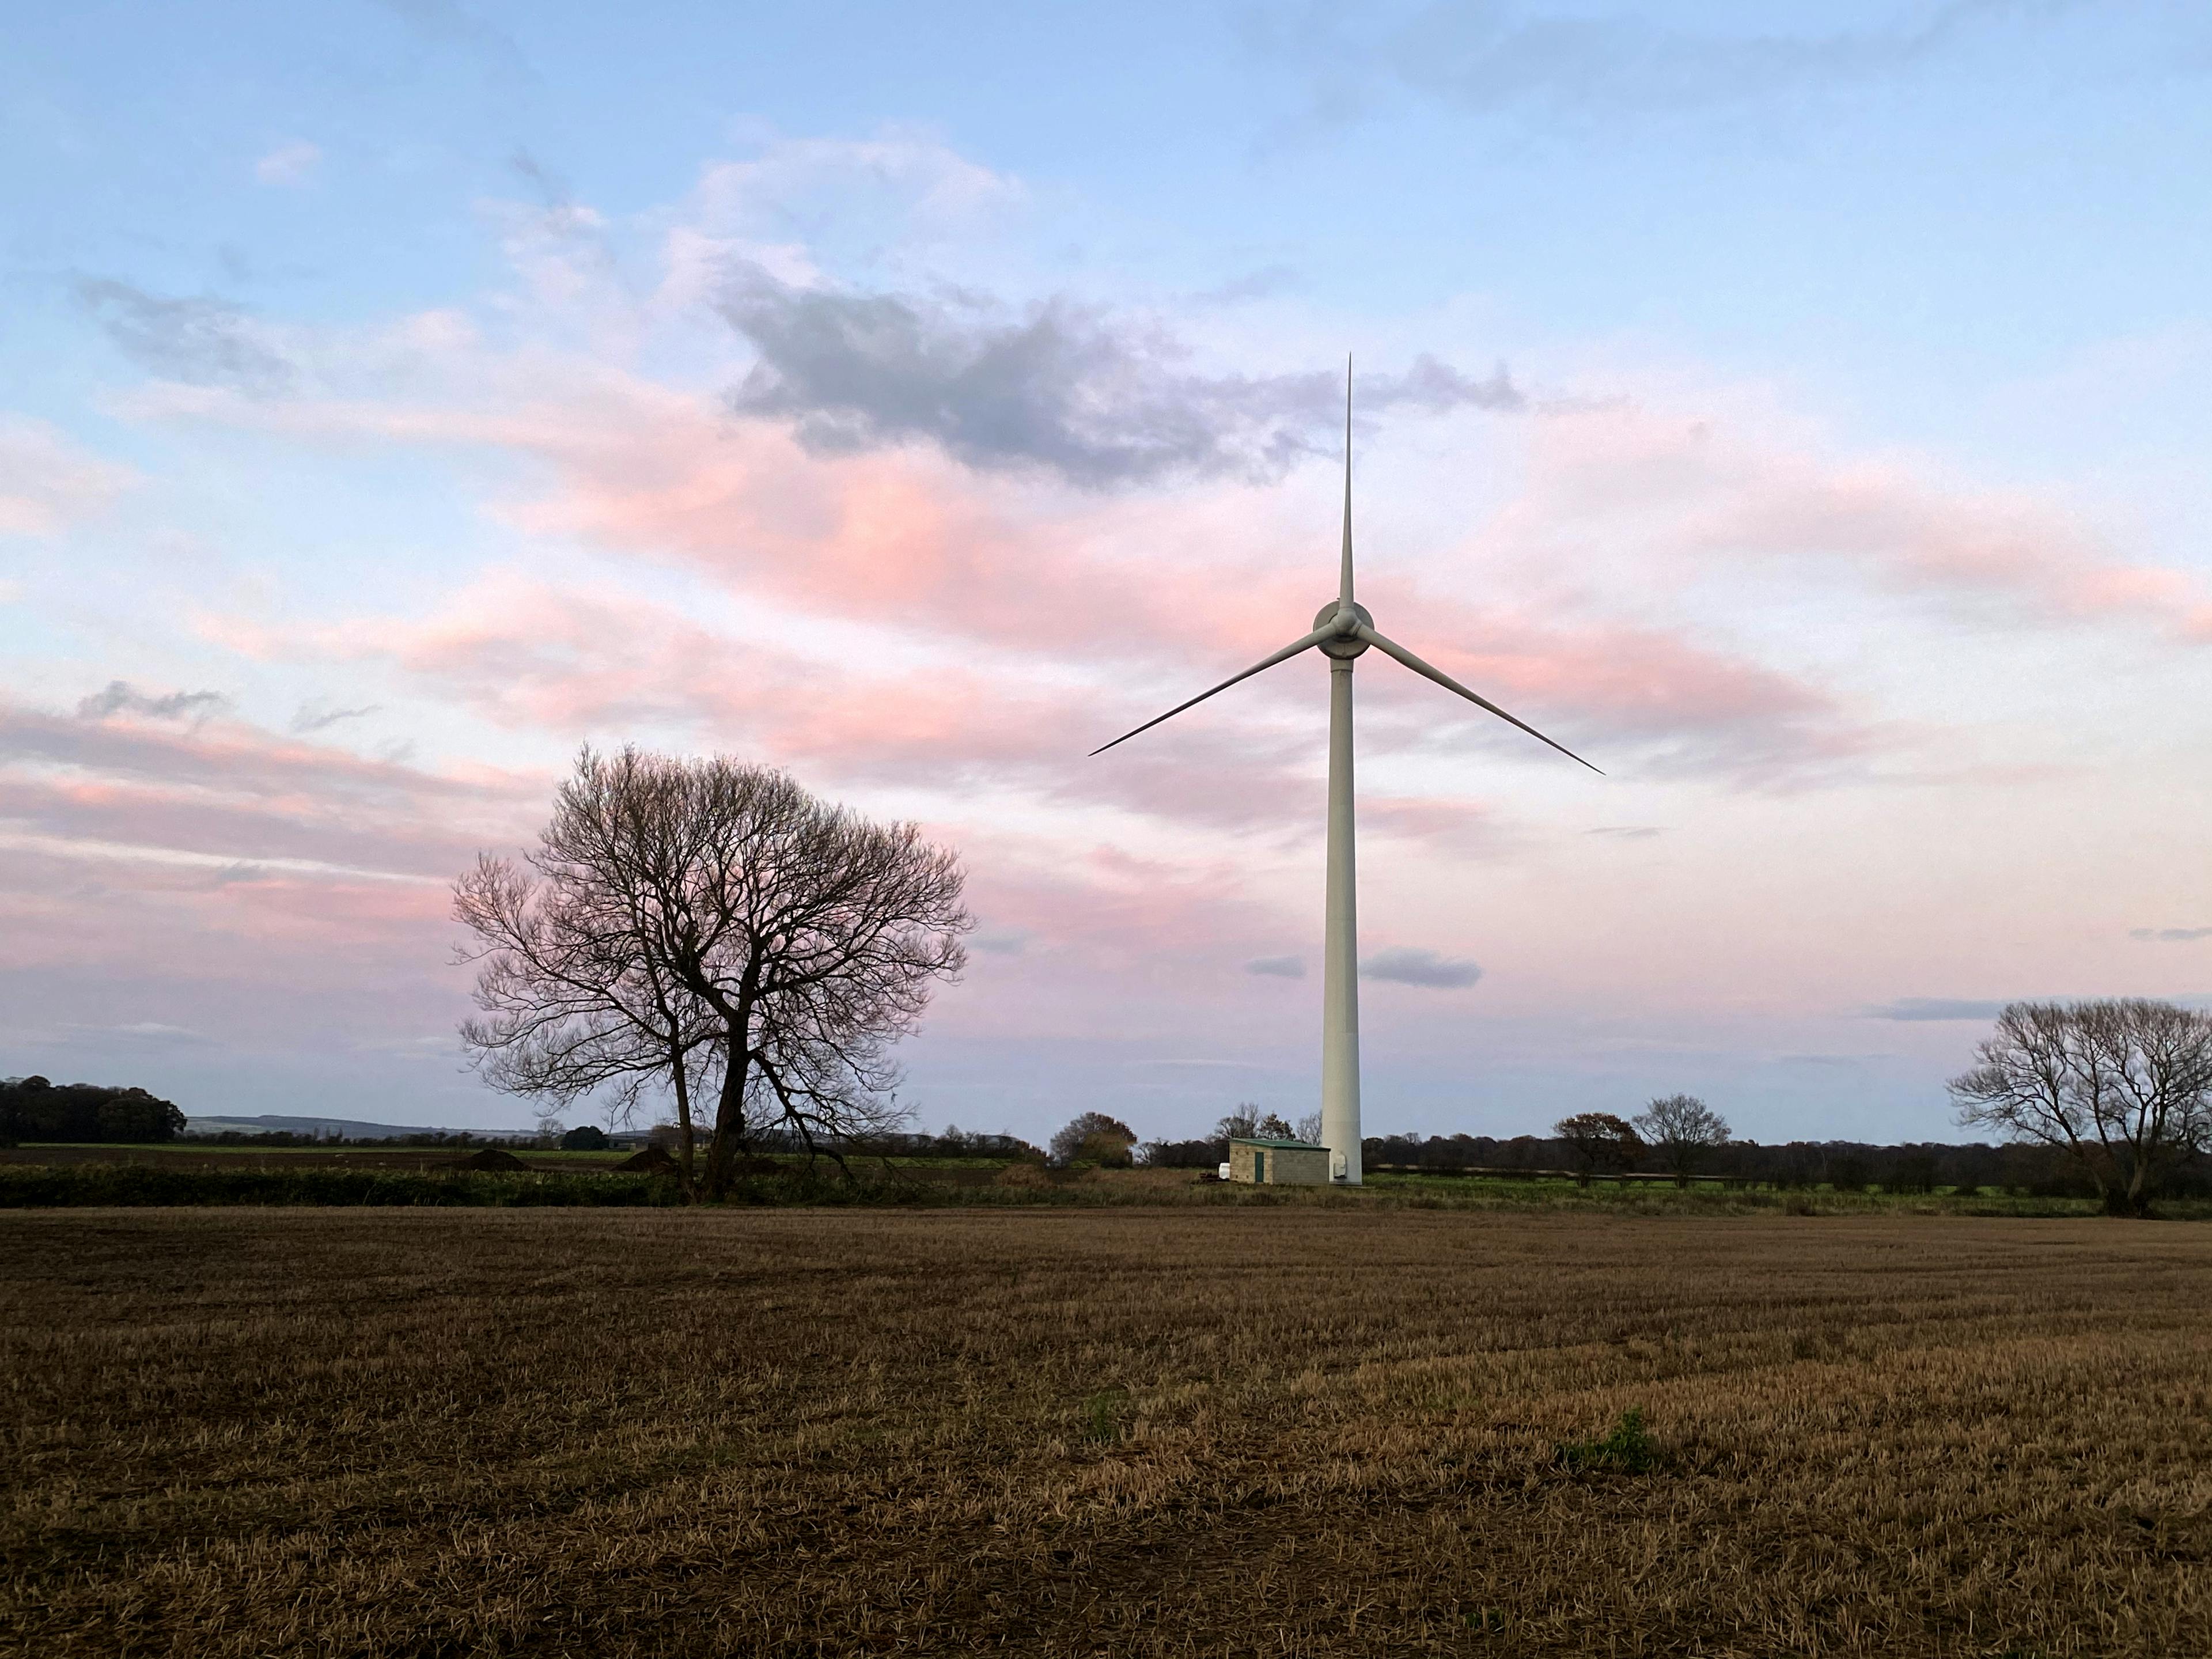 A wind turbine against a colourful sky backdrop